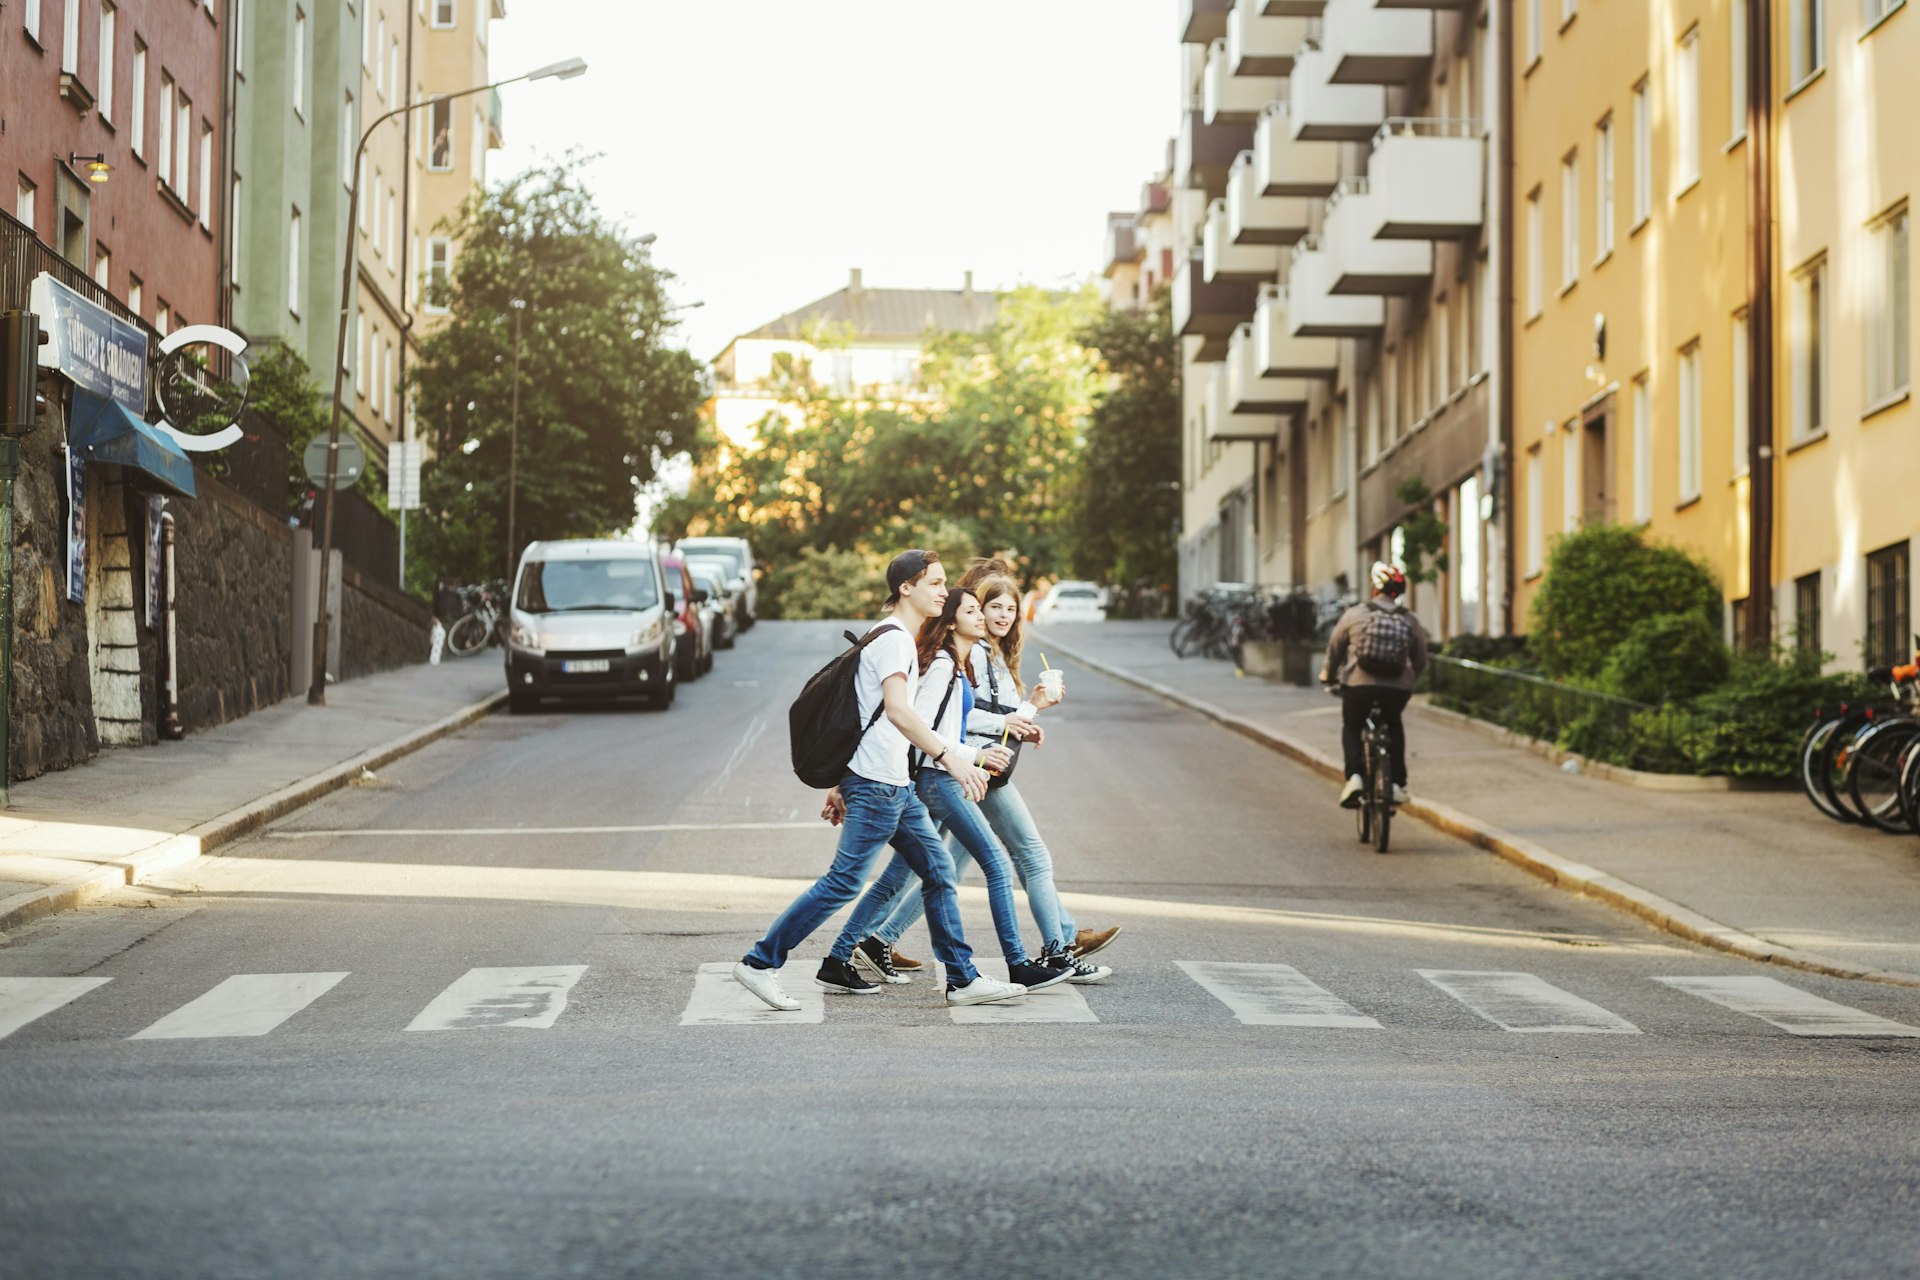 Teenagers cross the street in Stockholm